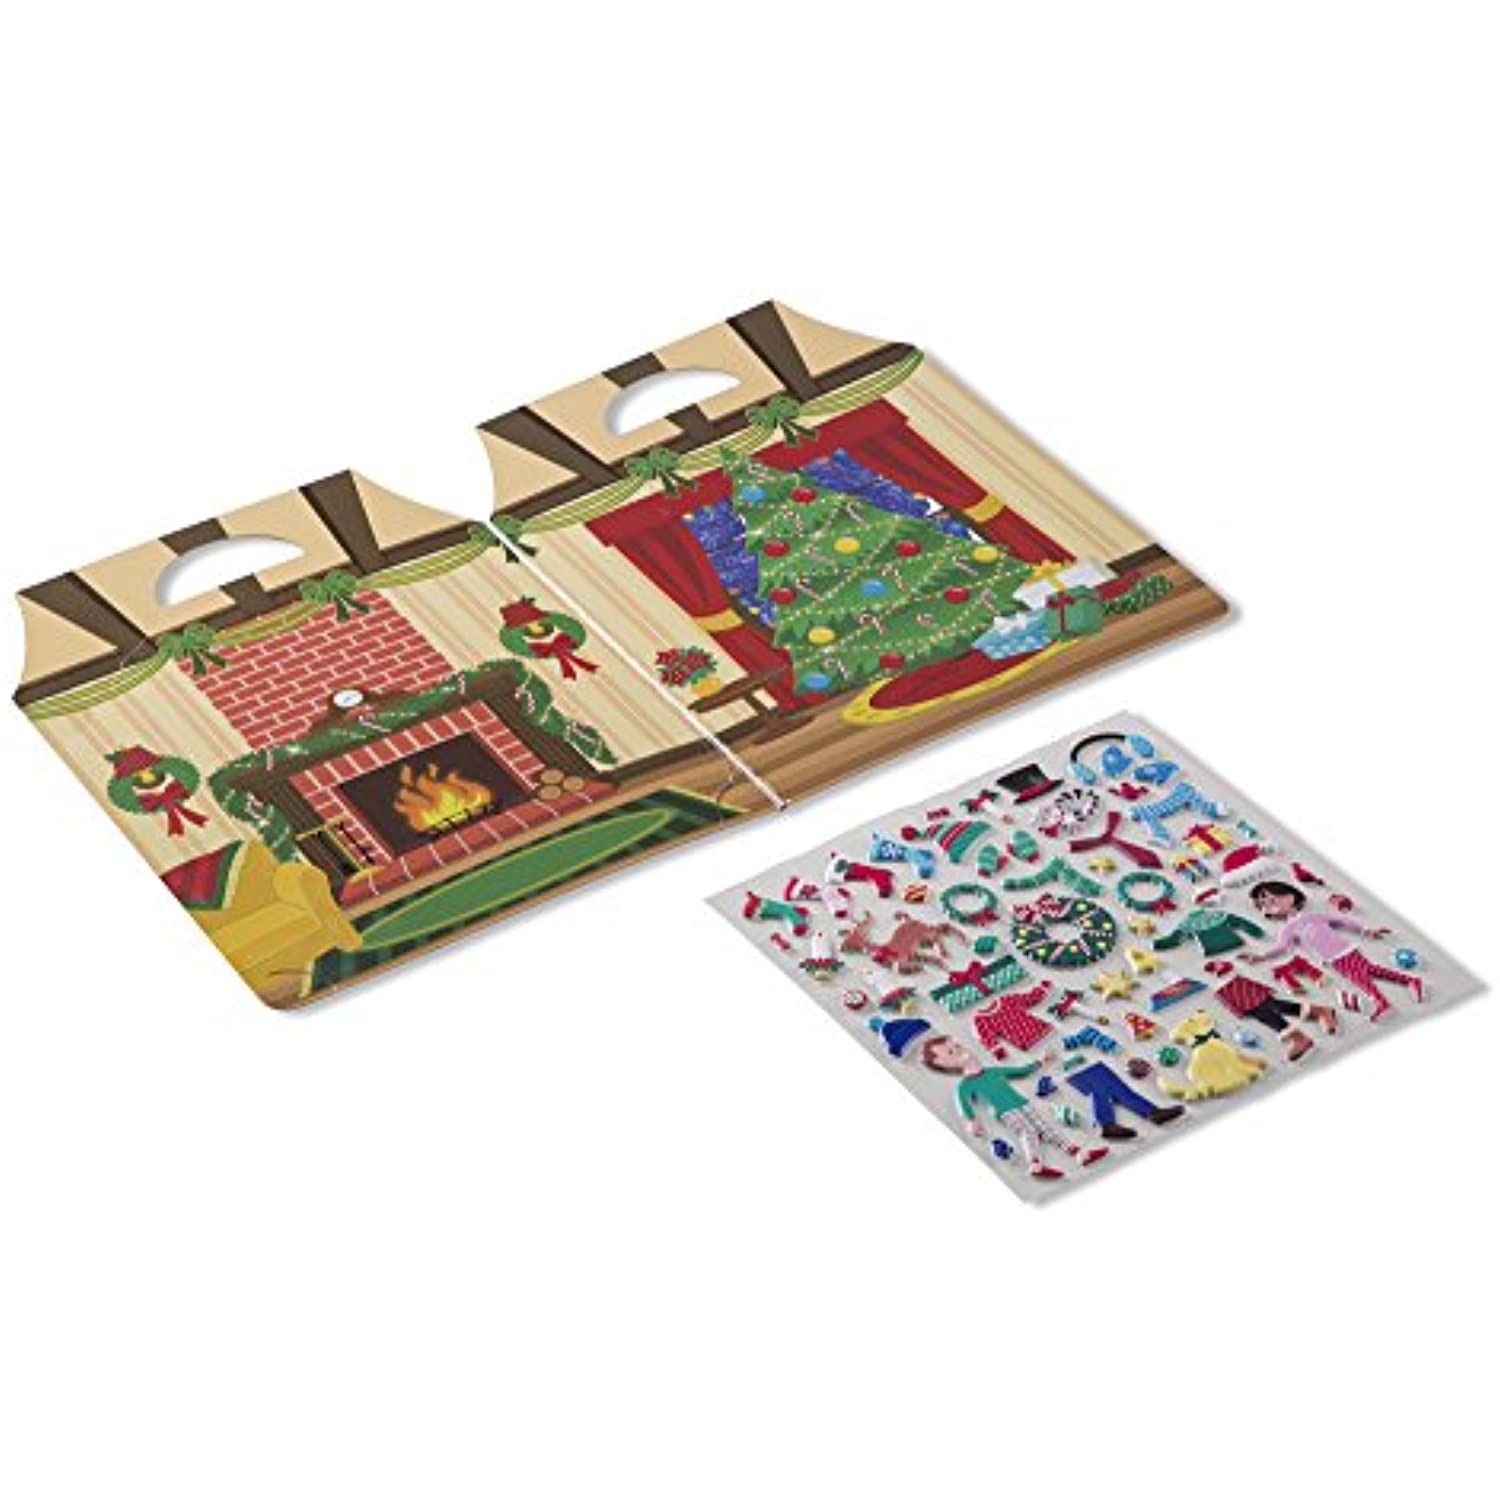 Melissa & Doug Puffy Reusable Sticker Pad Sets -Santa's Workshop & 'Tis the Season Activity Books